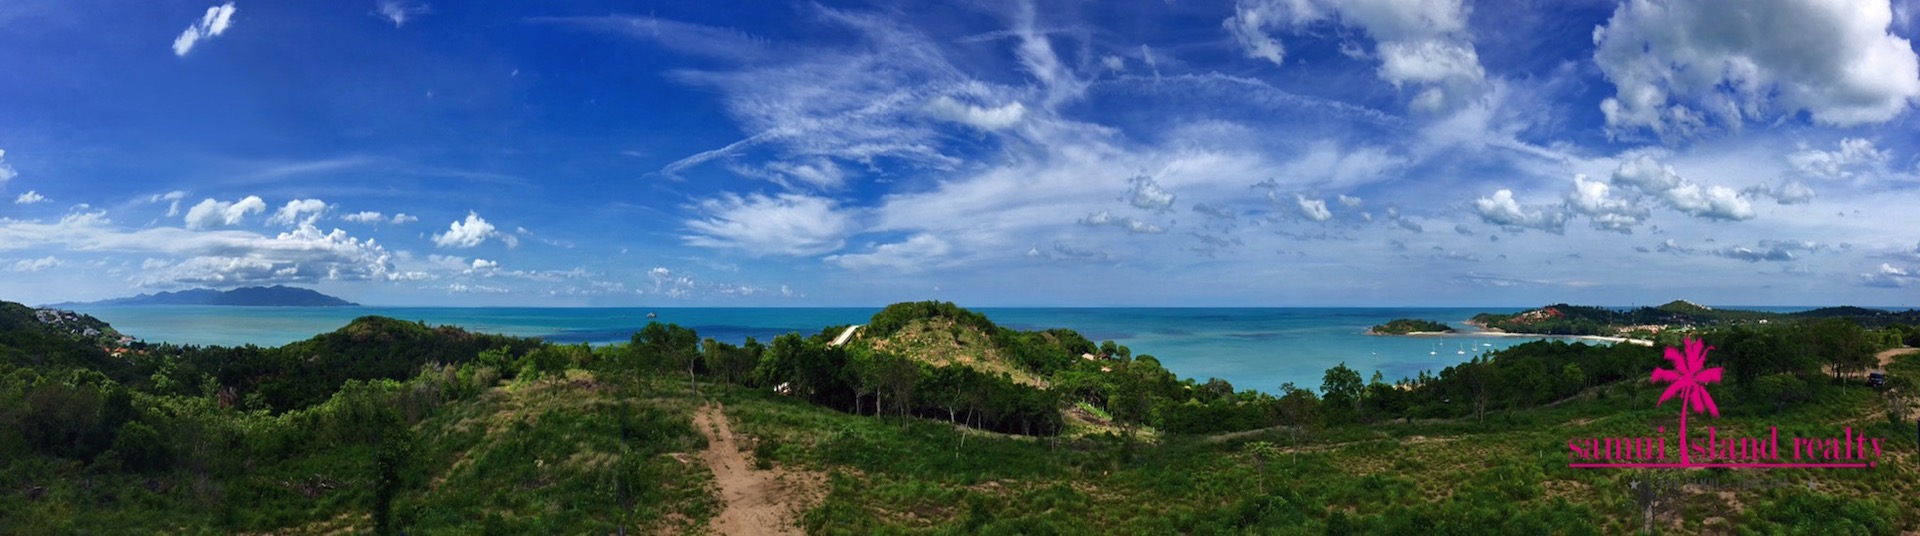 Koh Samui Sea View Development Land For Sale Panoramic View